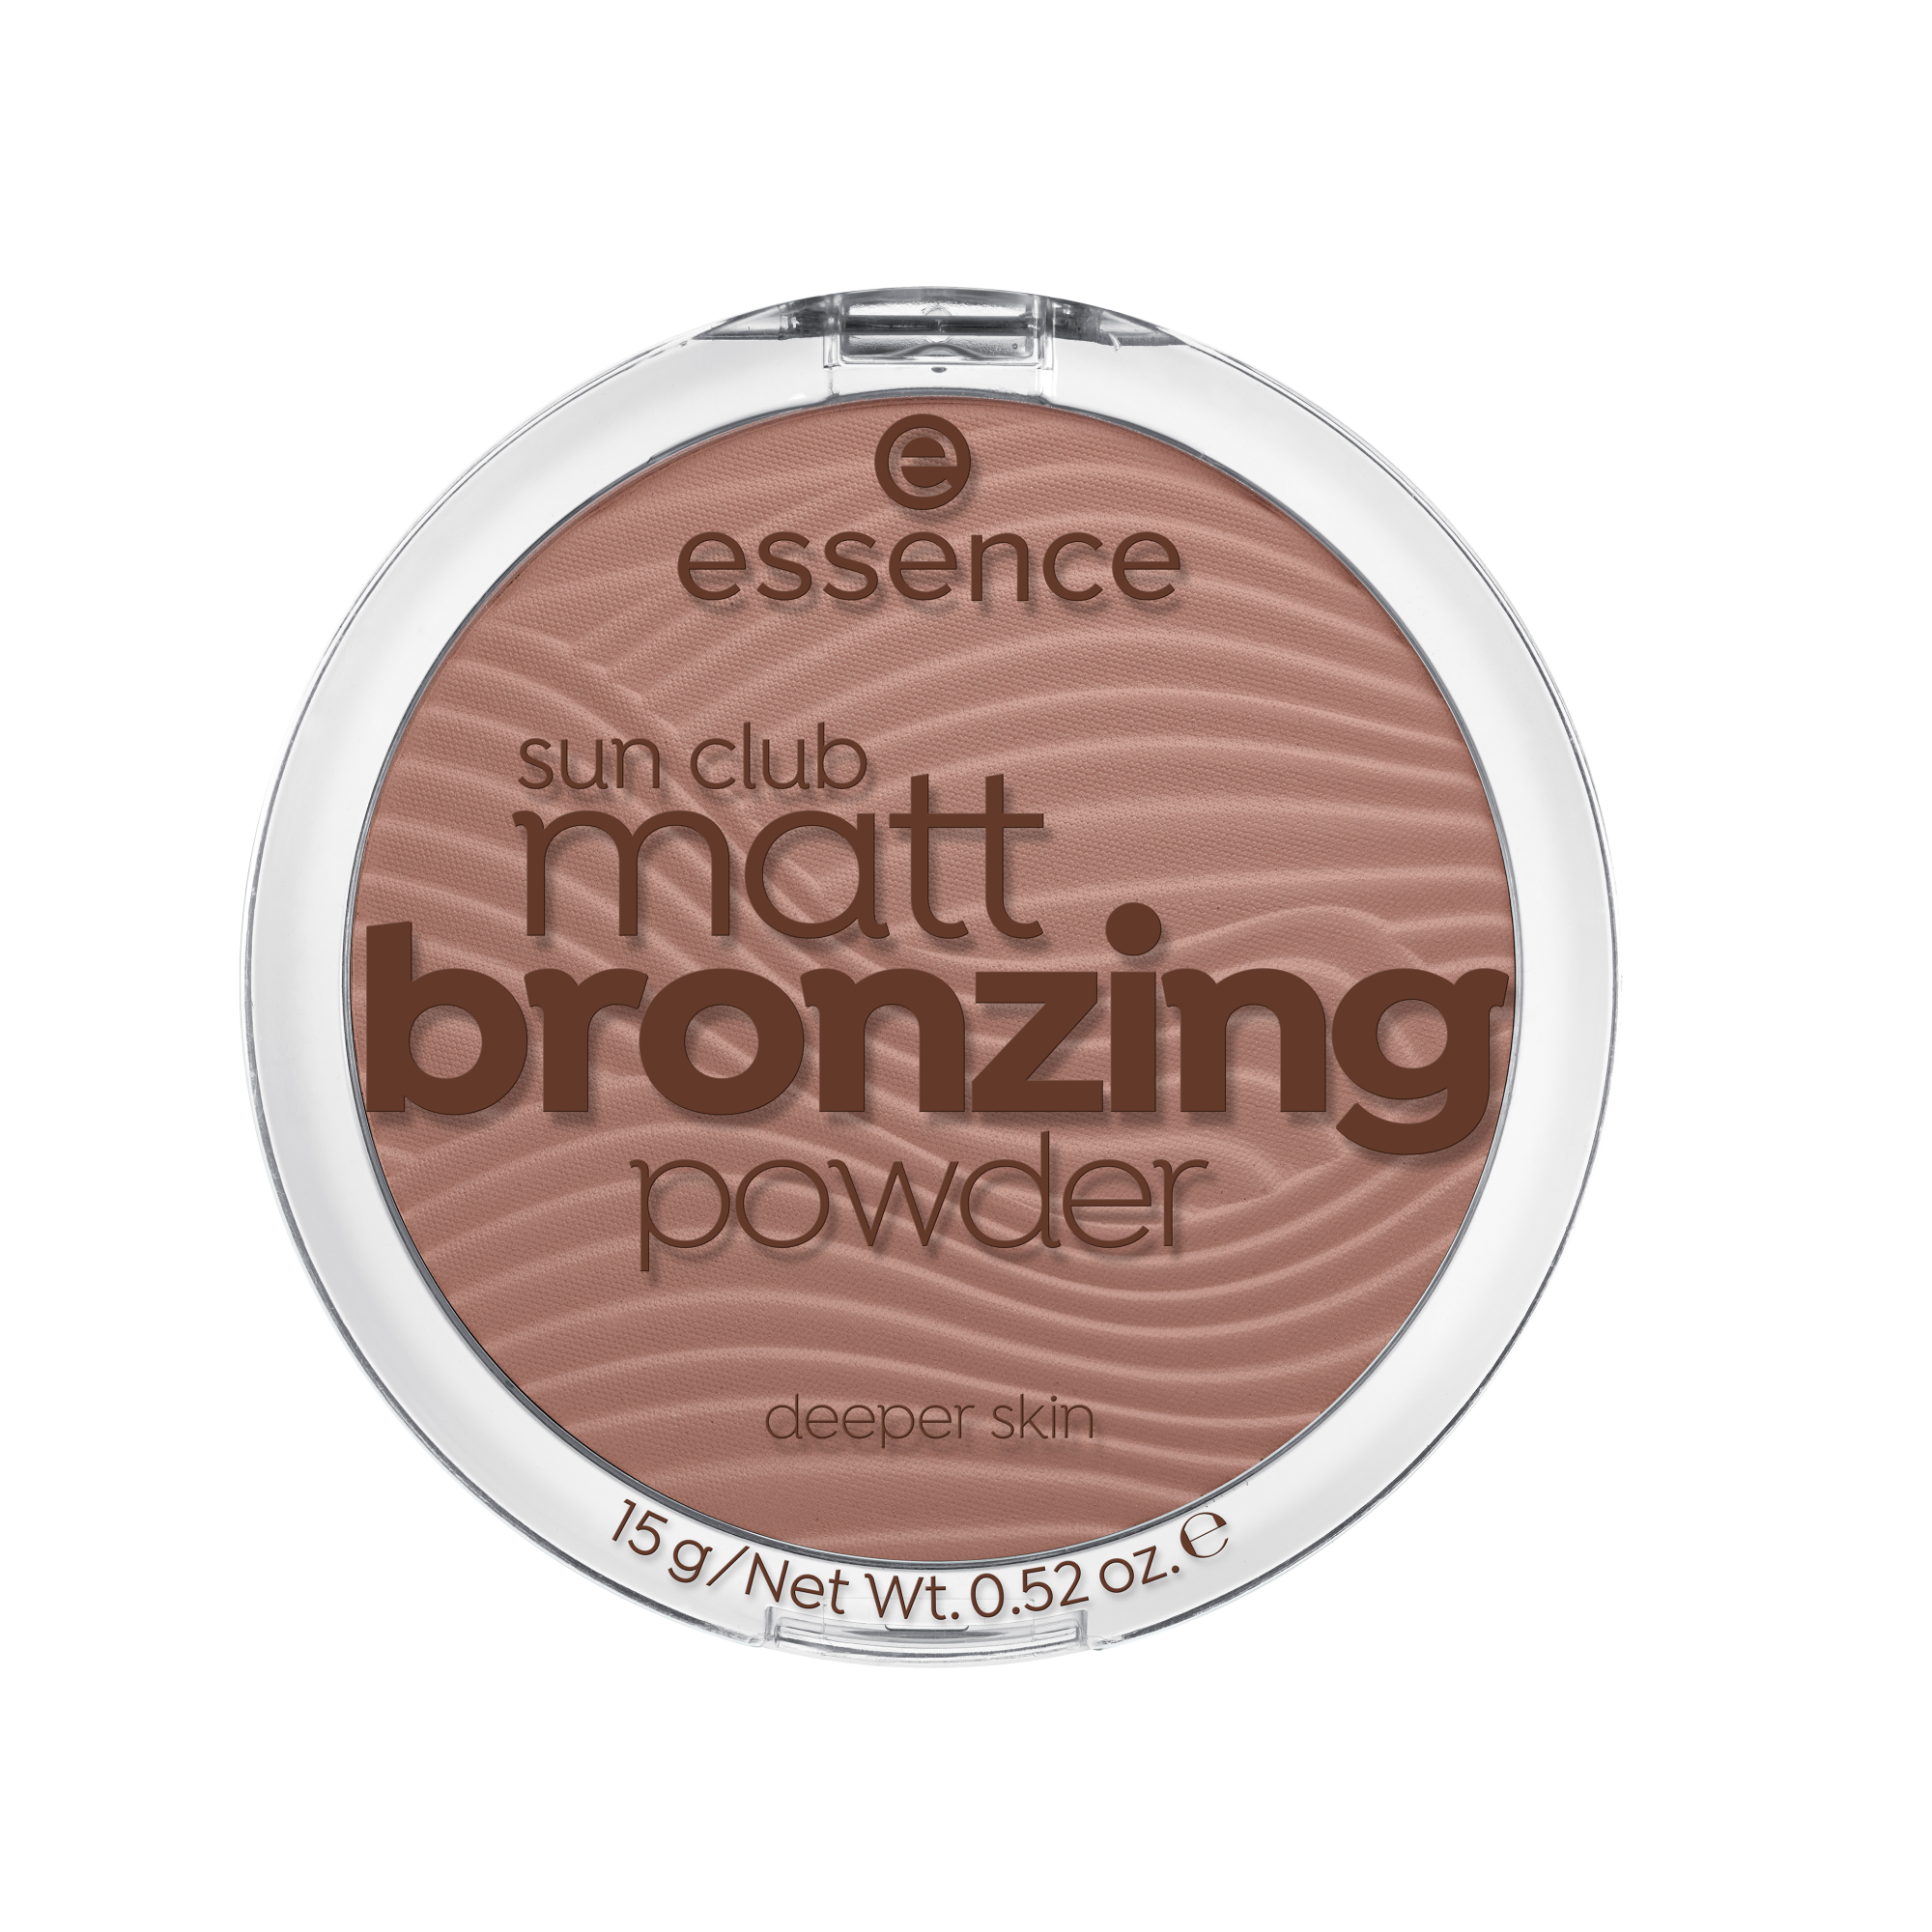 sun club powder essence bronzing – makeup matte